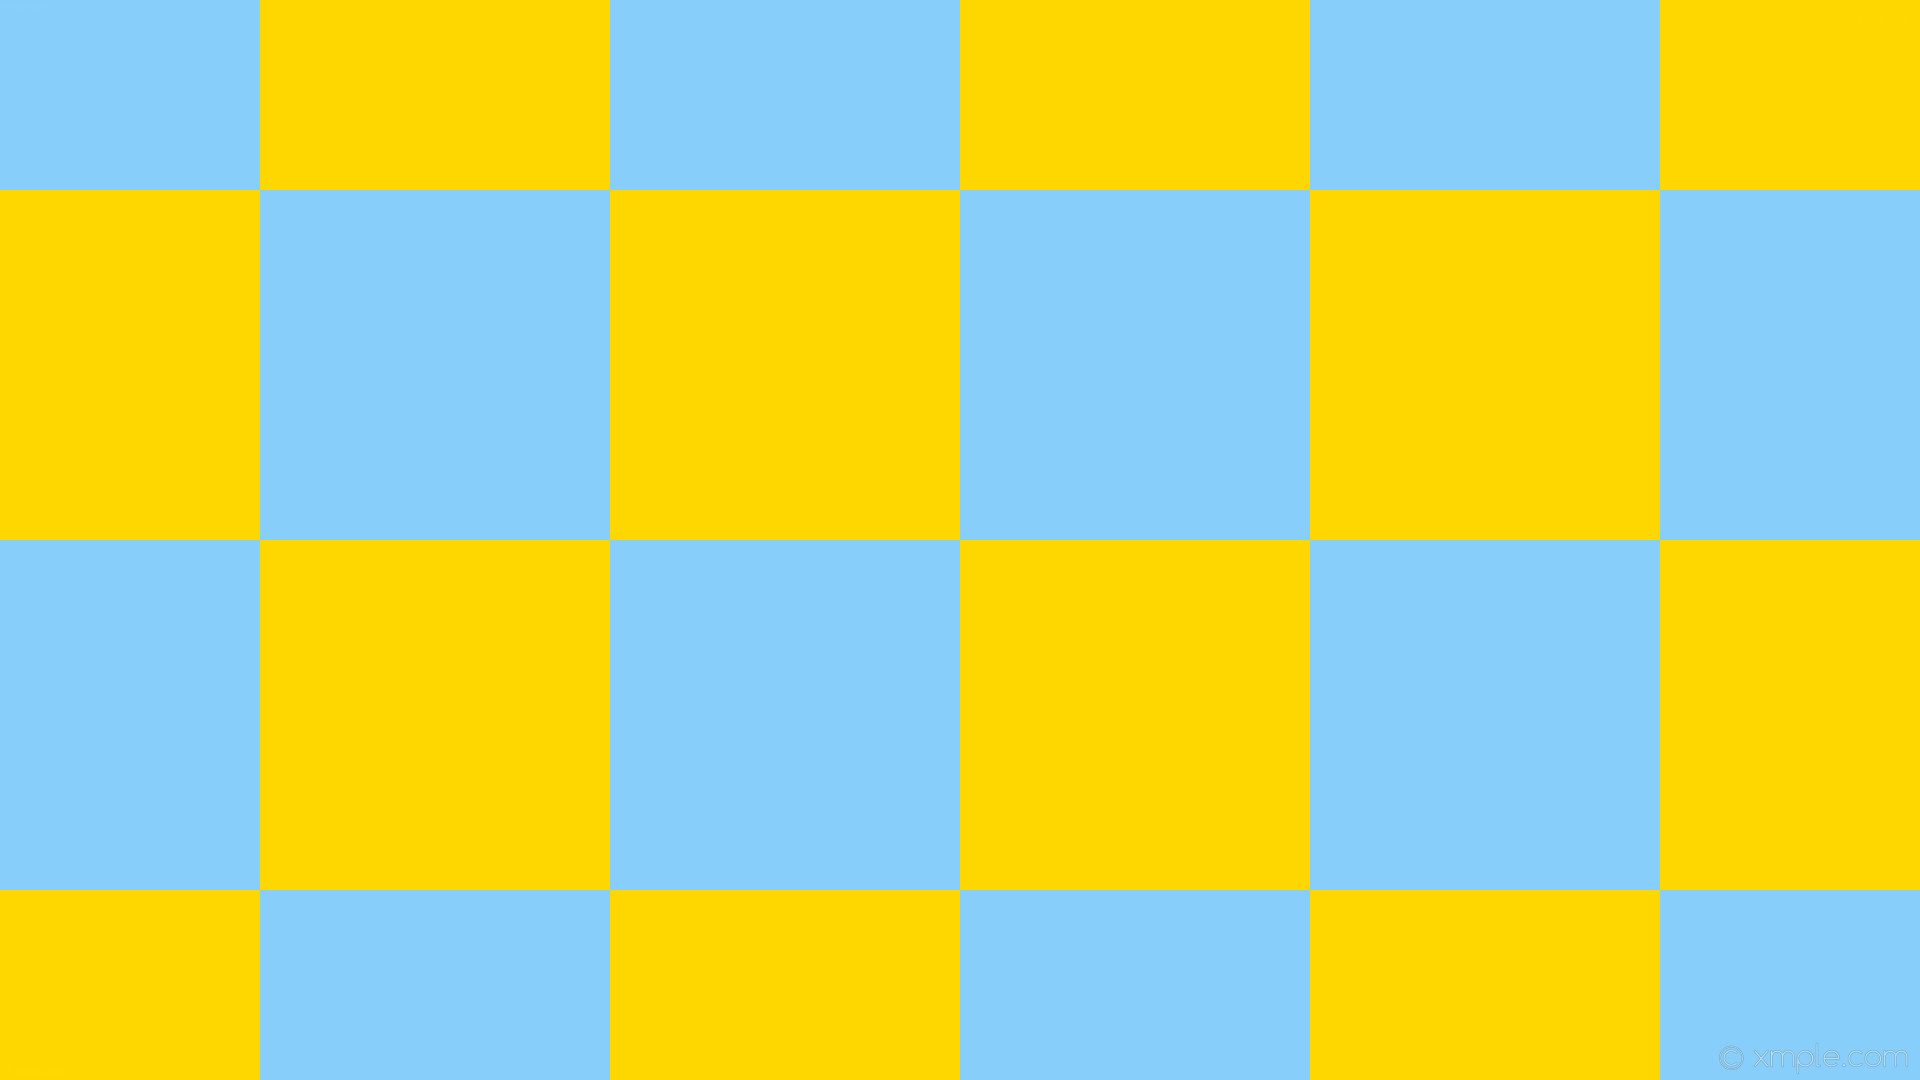 1920x1080 wallpaper squares checkered yellow blue gold light sky blue #ffd700 #87cefa  diagonal 0Â°